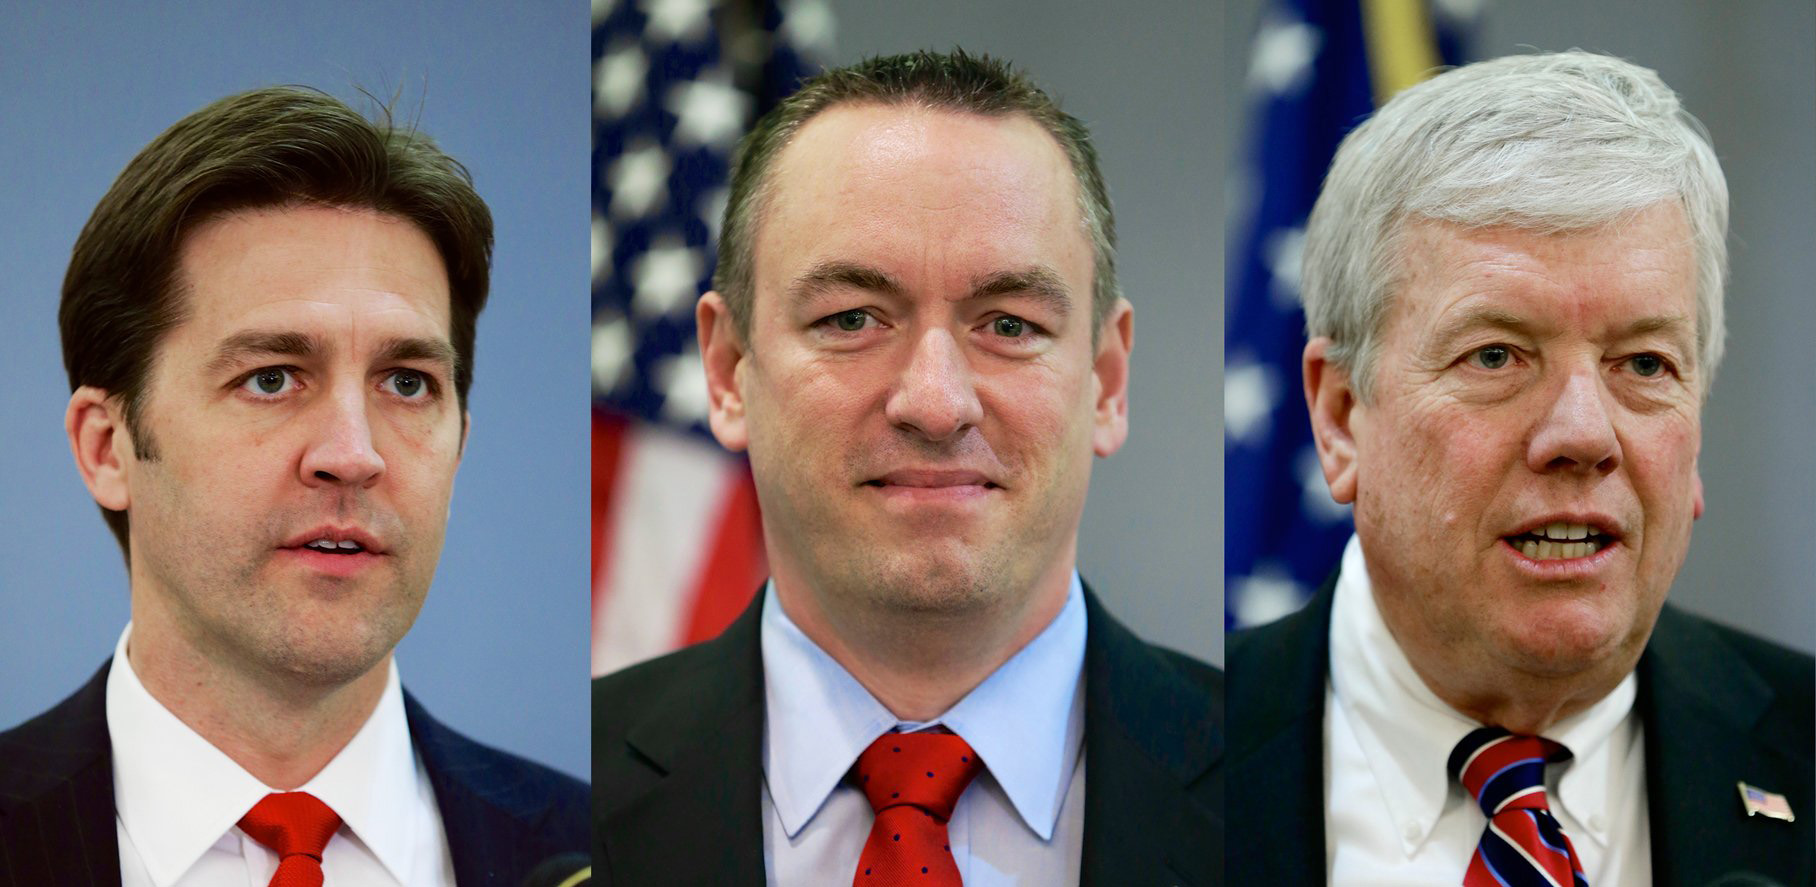 Nebraska Election Ben Sasse, Shane Osborn, Sid Dinsdale